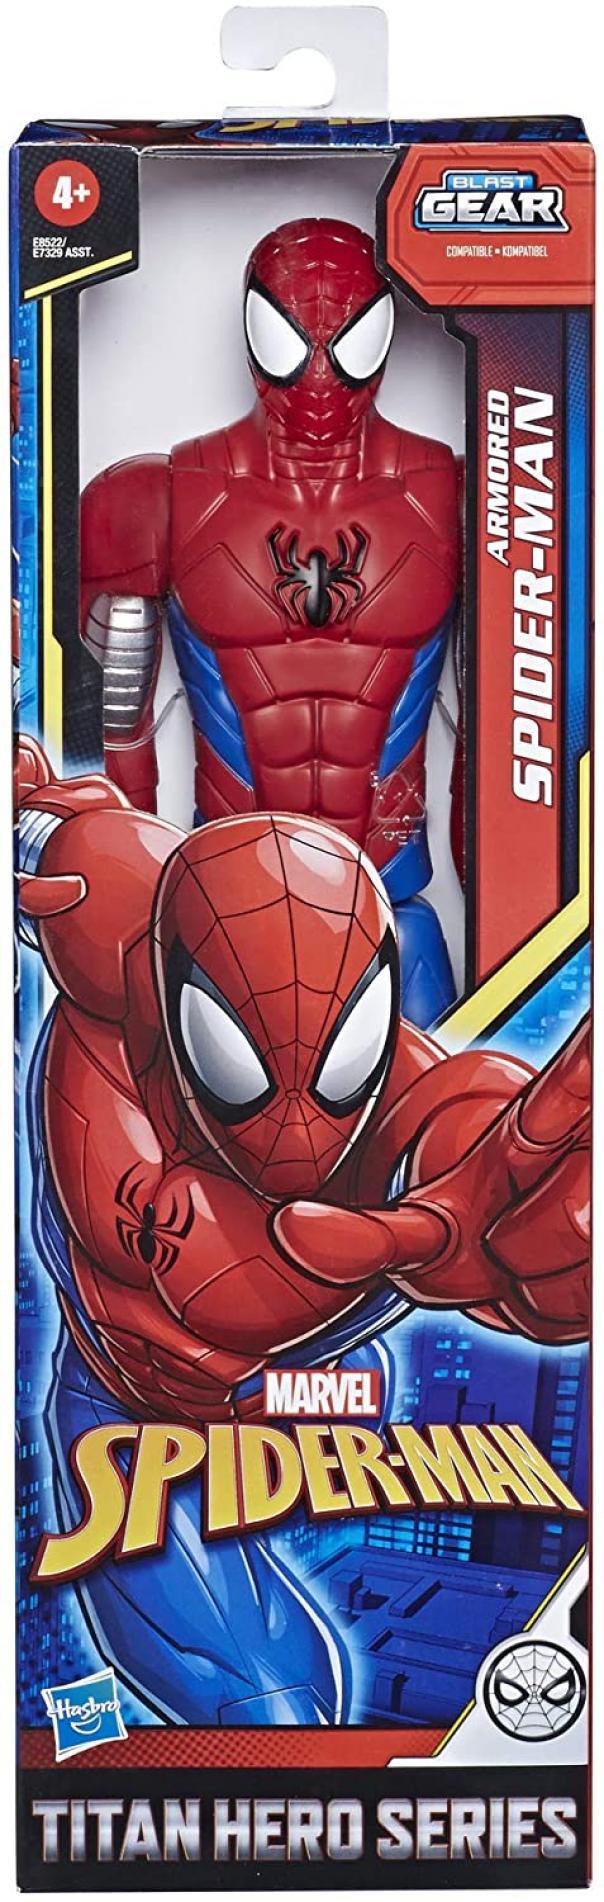 hasbro action figure armored spiderman titan hero series